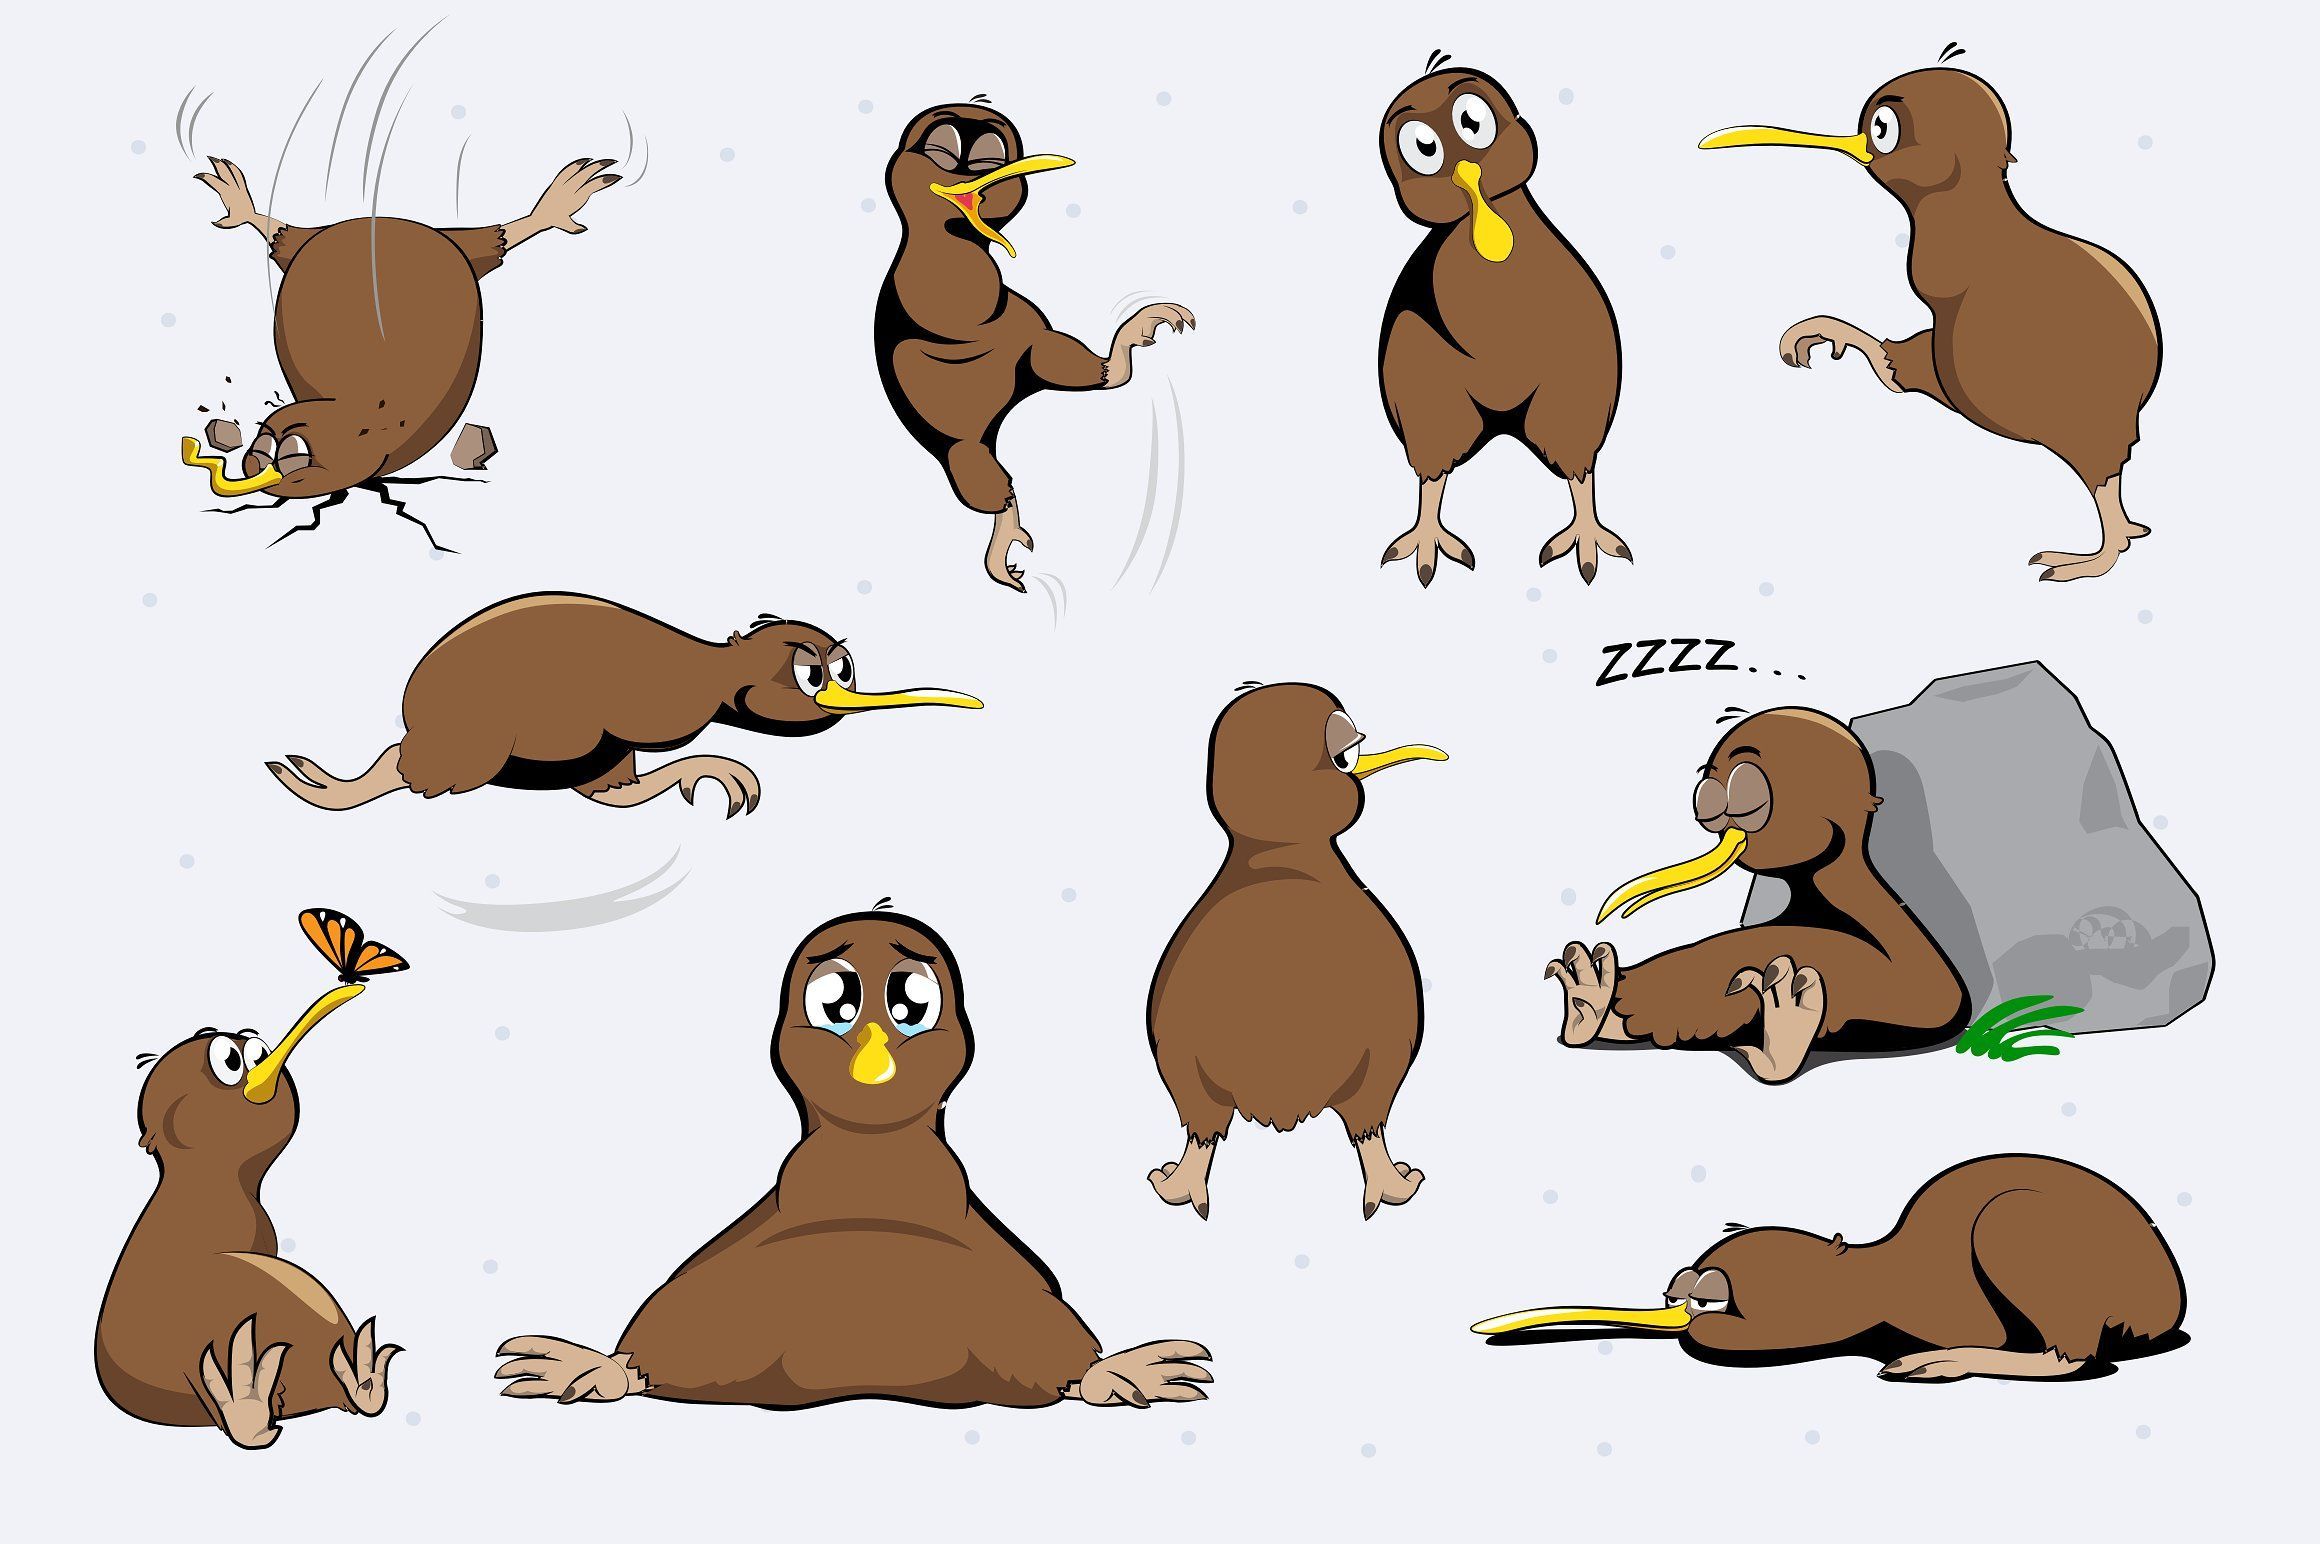 Cute Kiwi The Bird Character. Kiwi bird, Character design